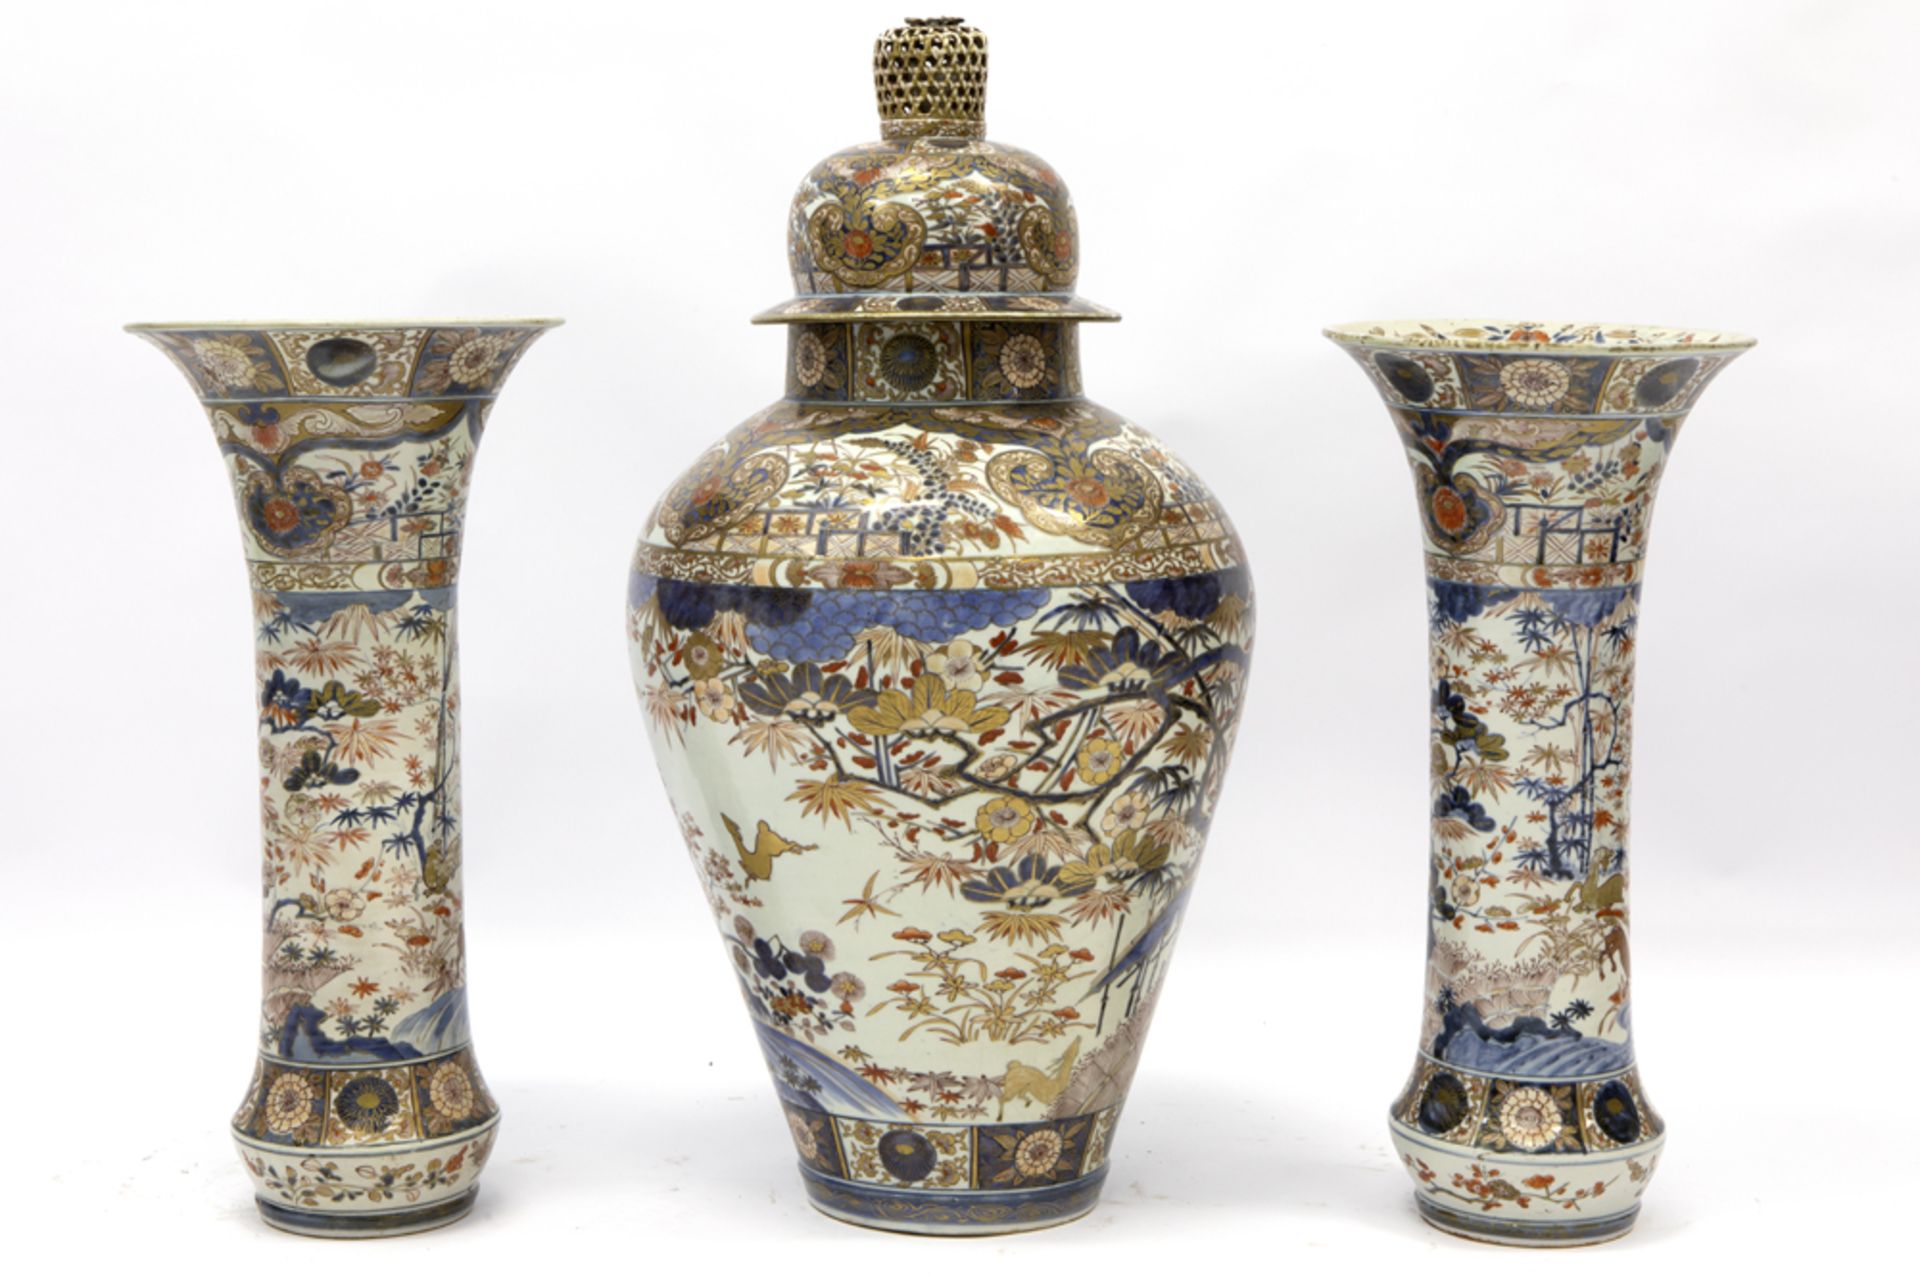 antique imposing 3pc garniture in porcelain with a fine Imari decor : a pair of vases and a vase - Bild 3 aus 5